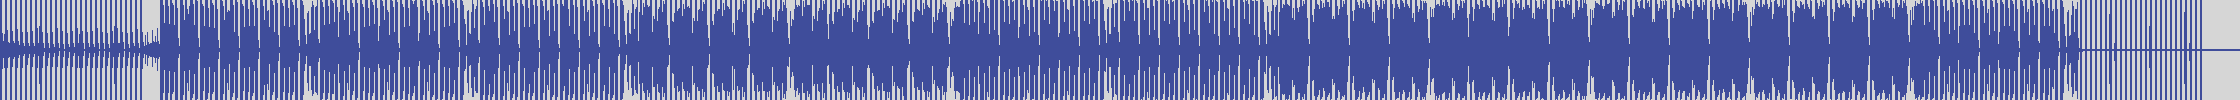 nf_boyz_records [NFY023] Neer - Premium [Berlin Tech Mix] audio wave form